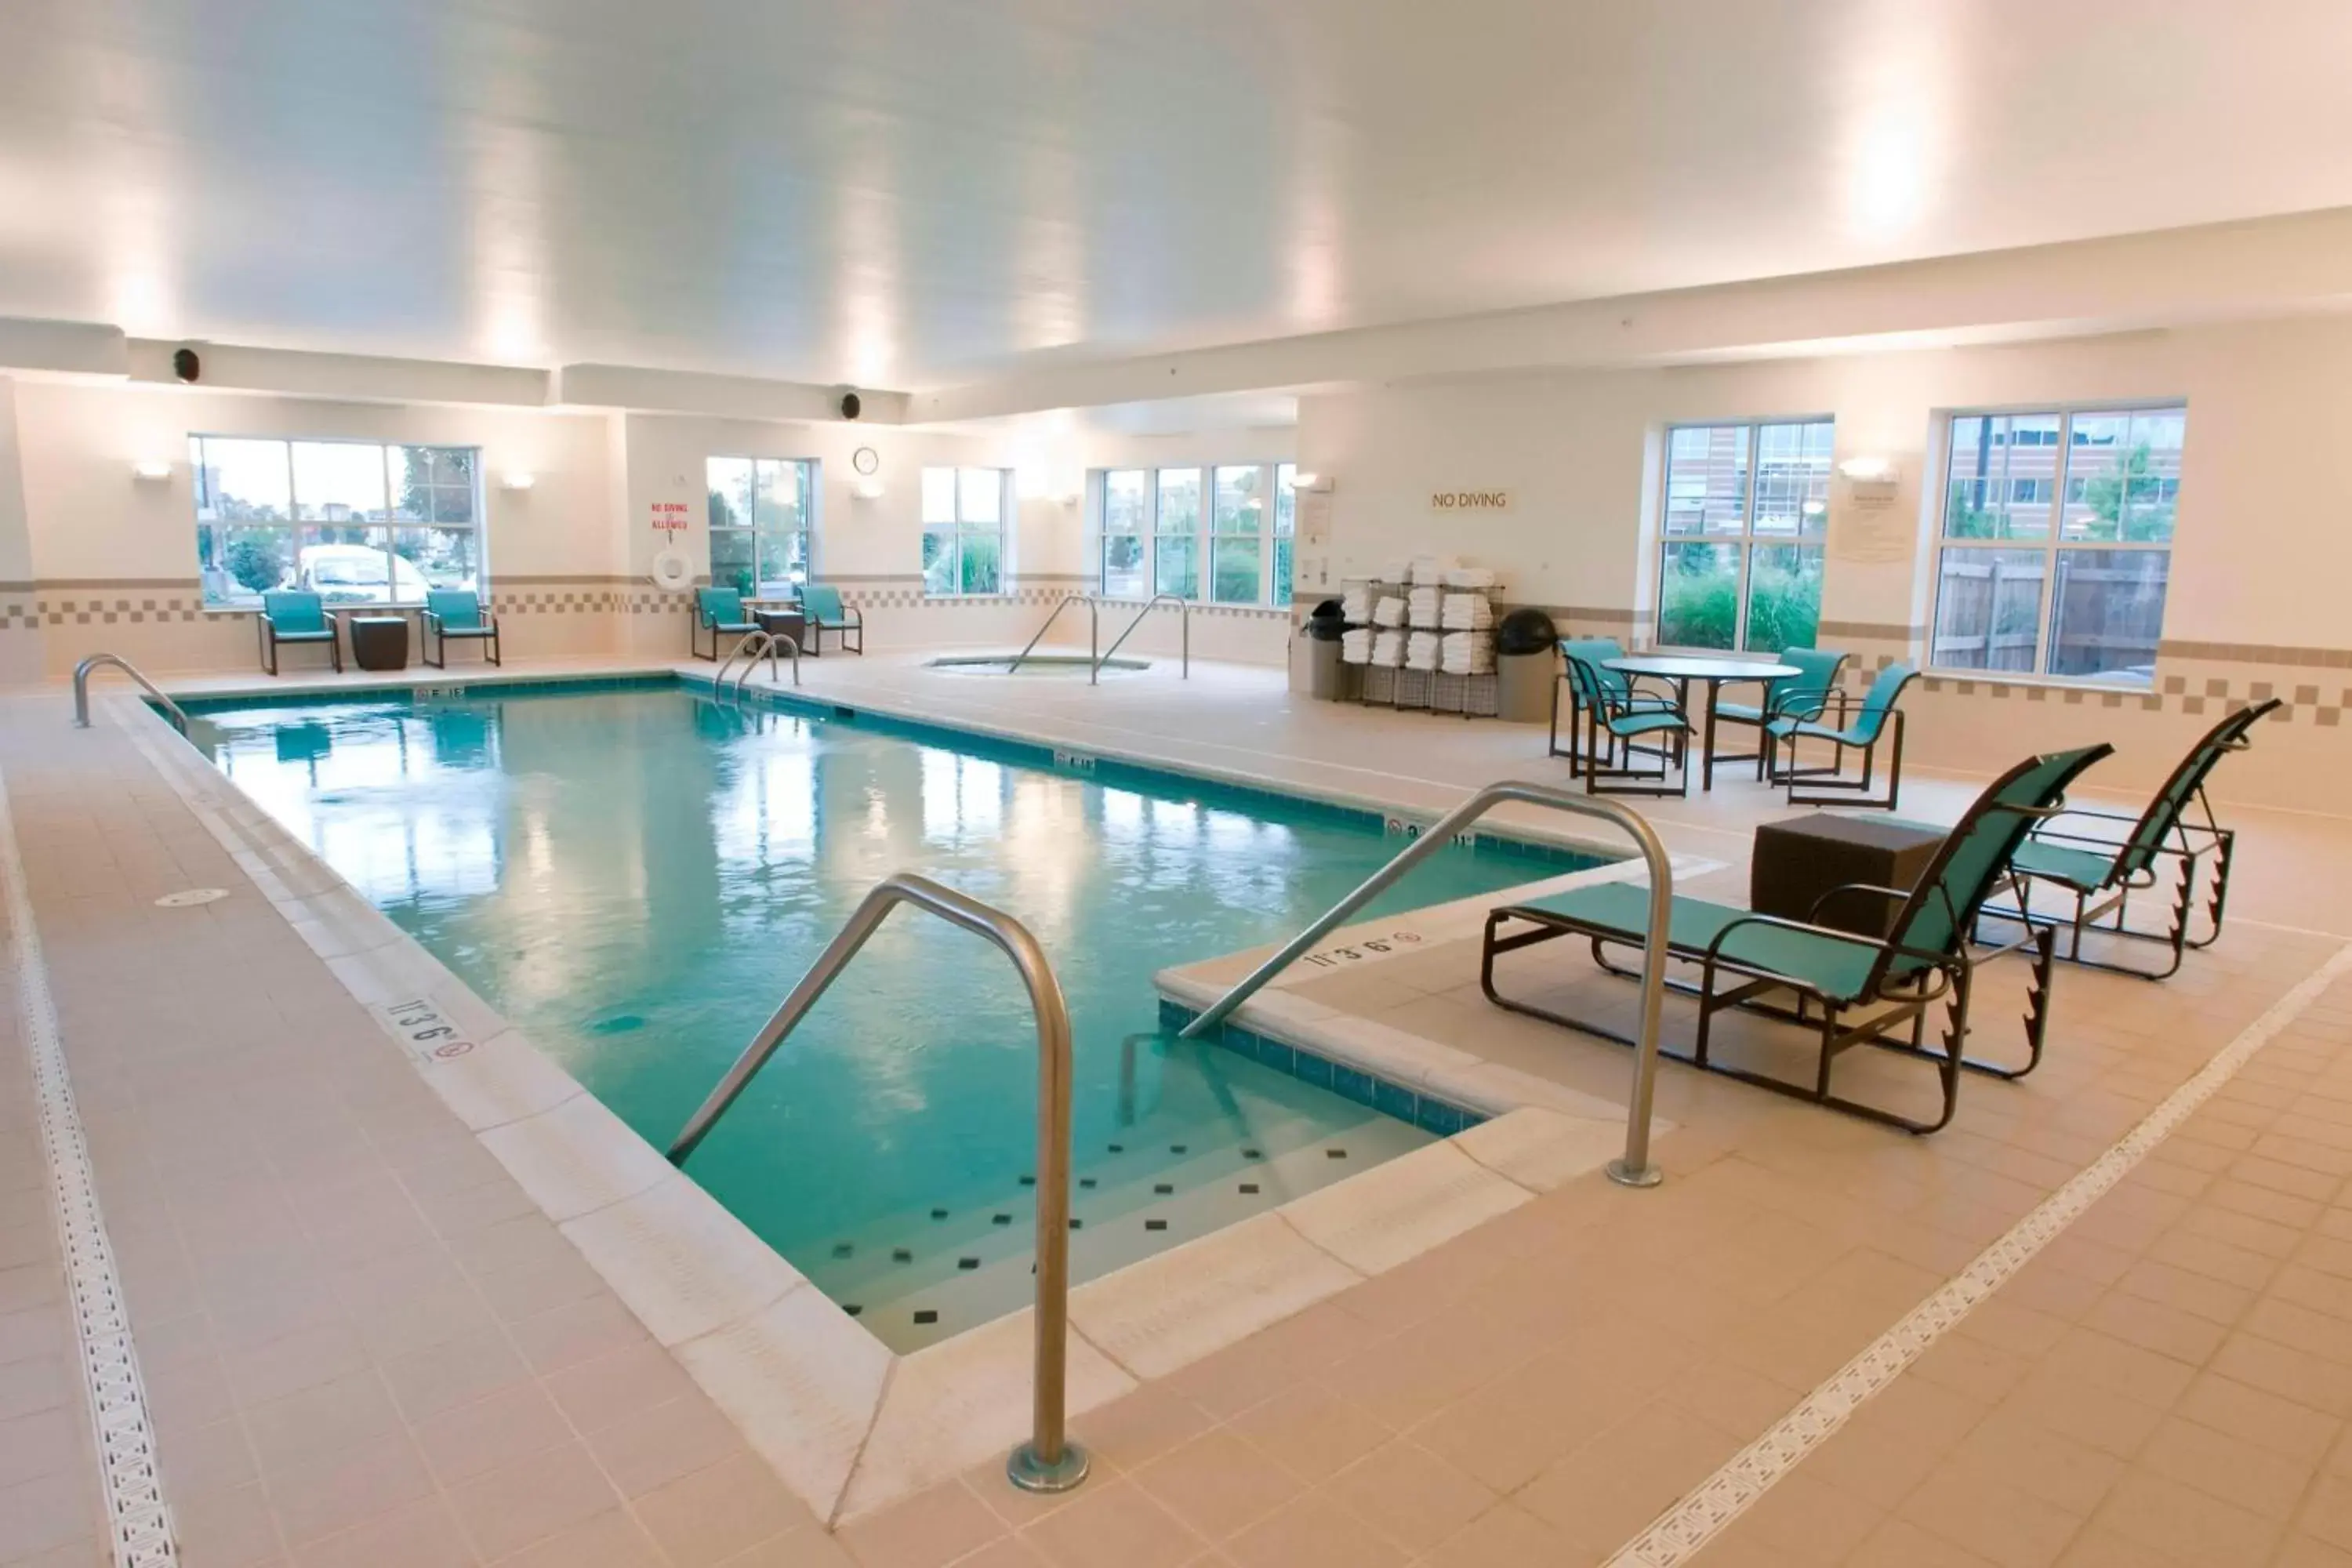 Swimming Pool in Residence Inn Cincinnati North West Chester